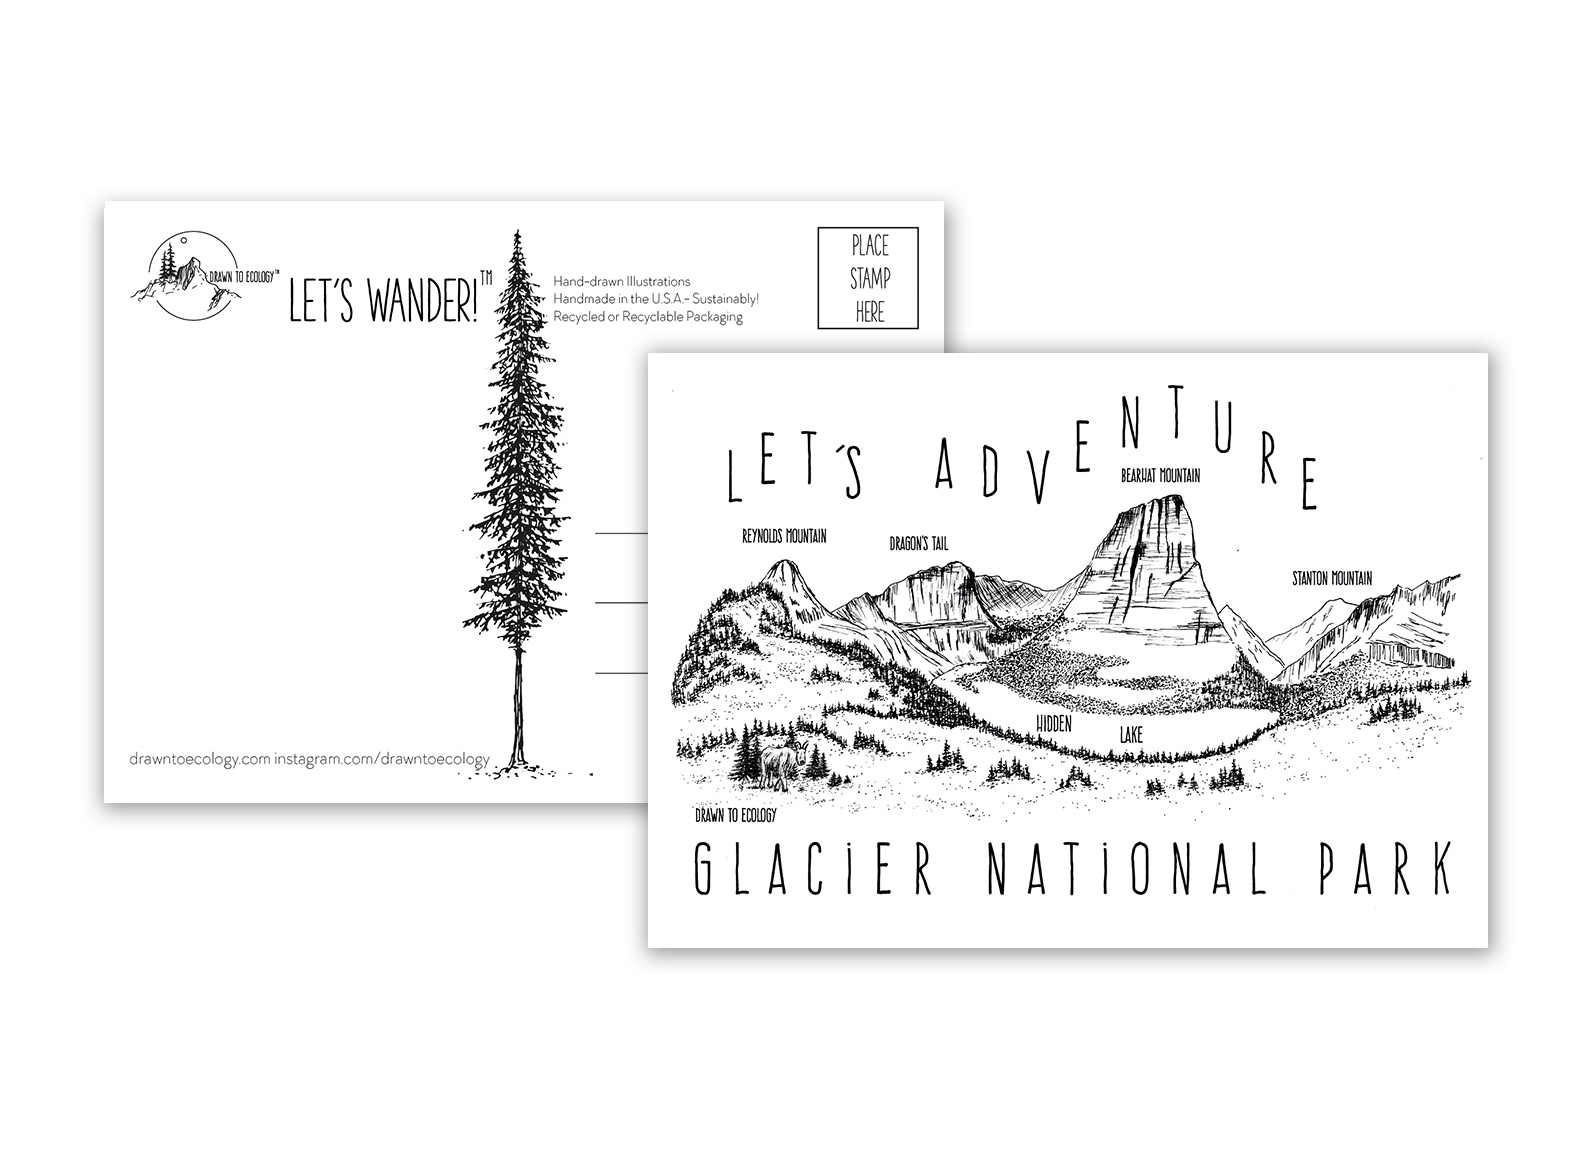 &#39;Let&#39;s Adventure&#39; Hidden Lake Glacier National Park Postcard